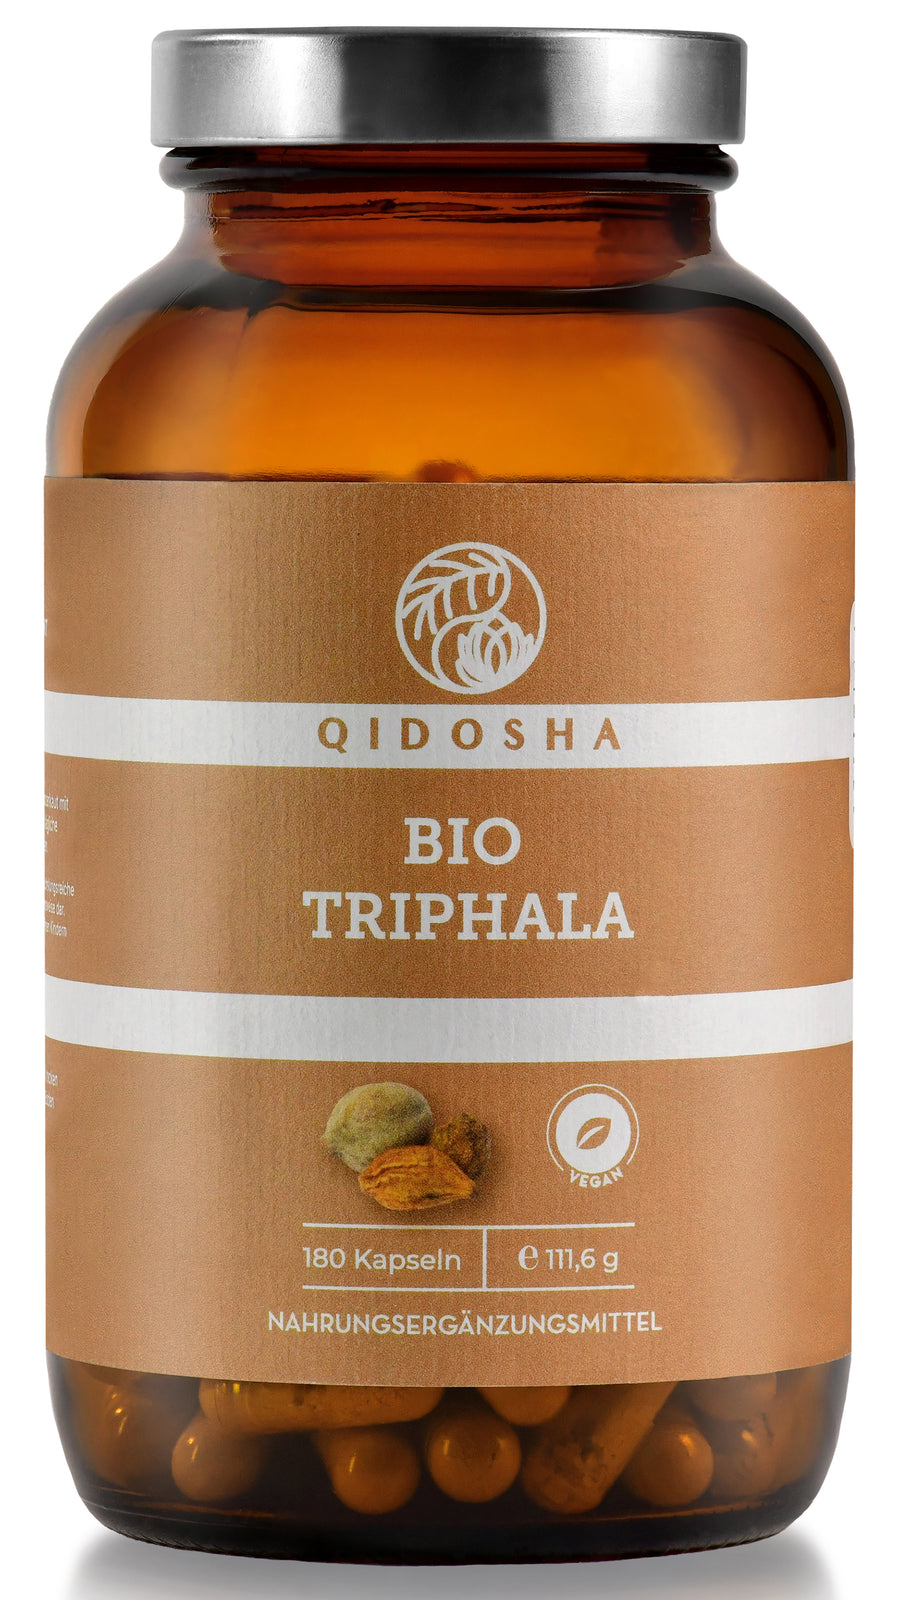 Organic Triphala in a glass